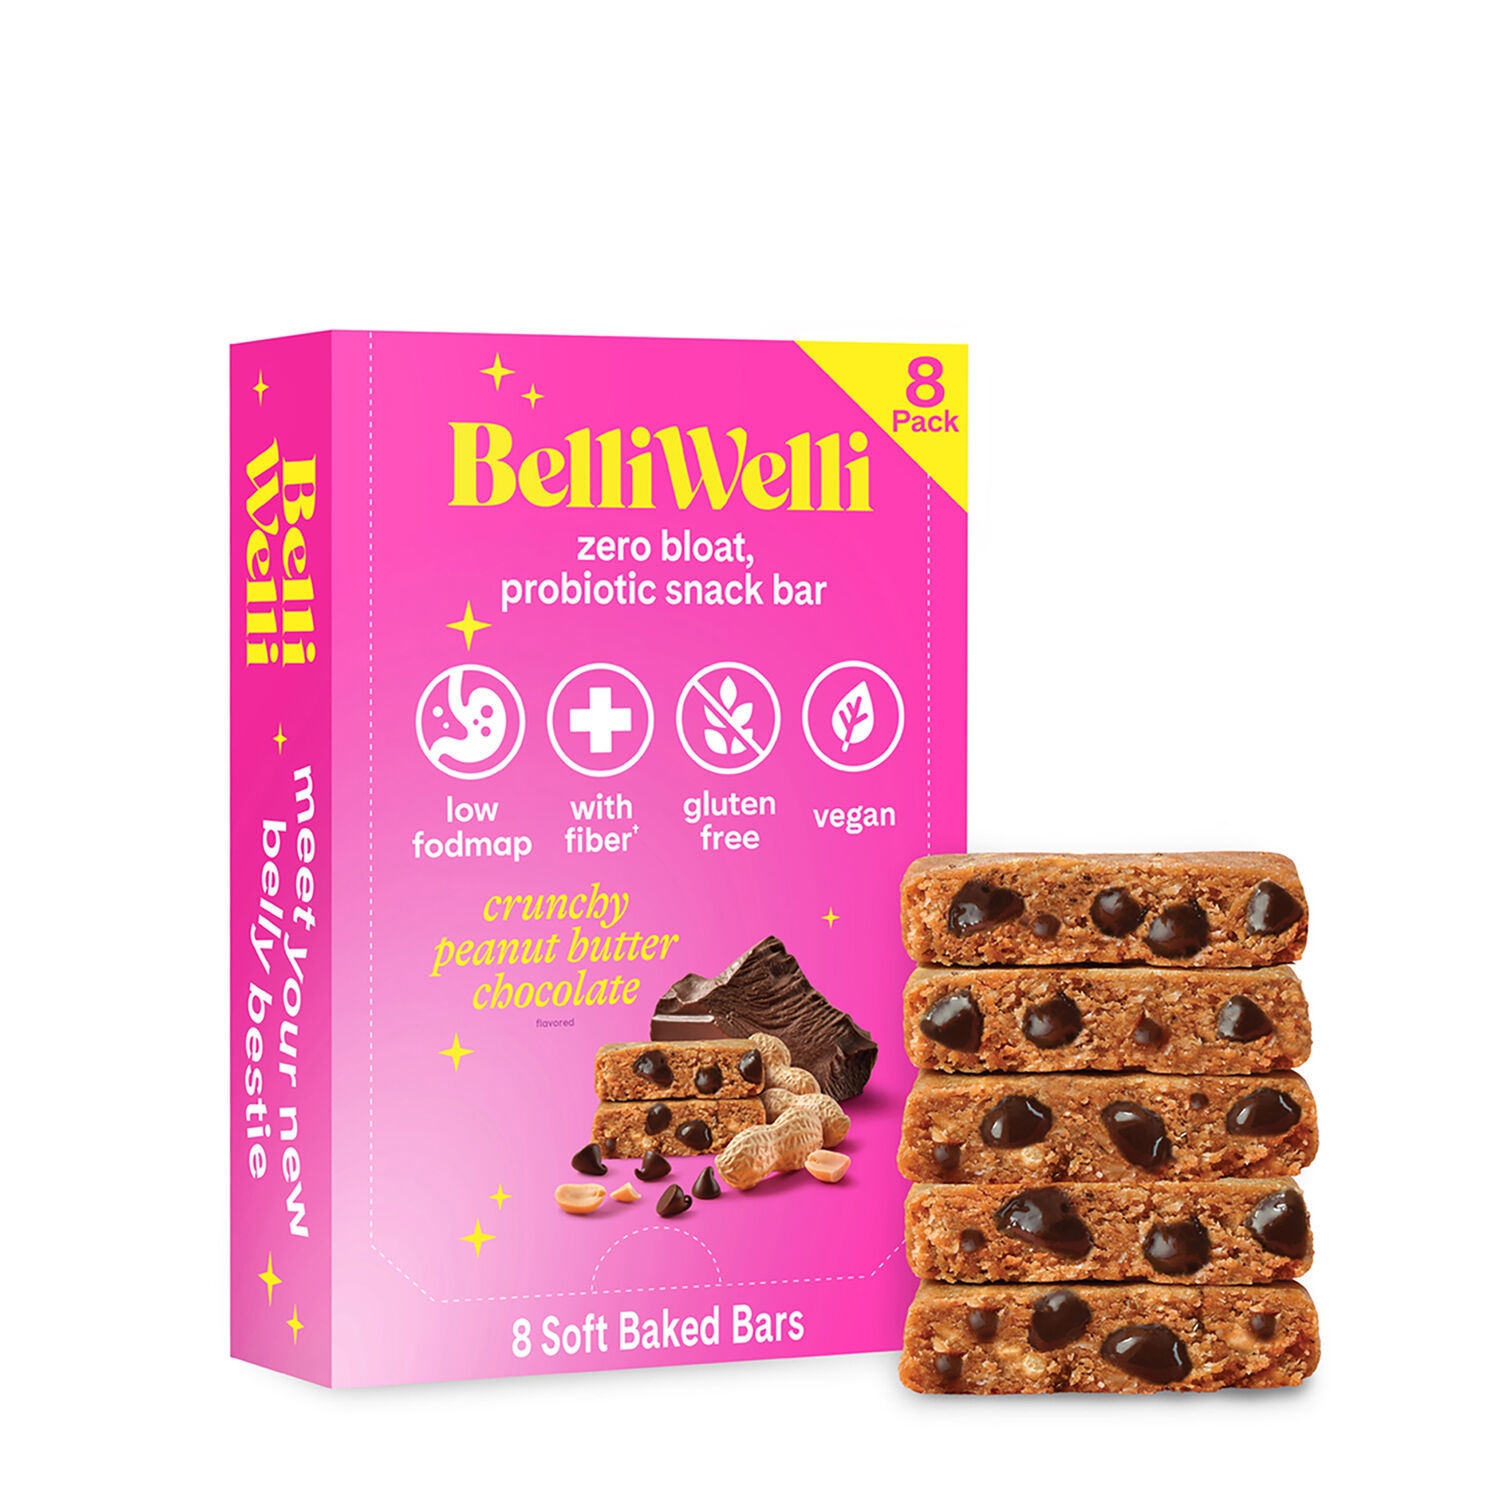 BelliWelli Probiotic Snack Bar Vegan - Dark Chocolate Peanut Butter (8 Bars)